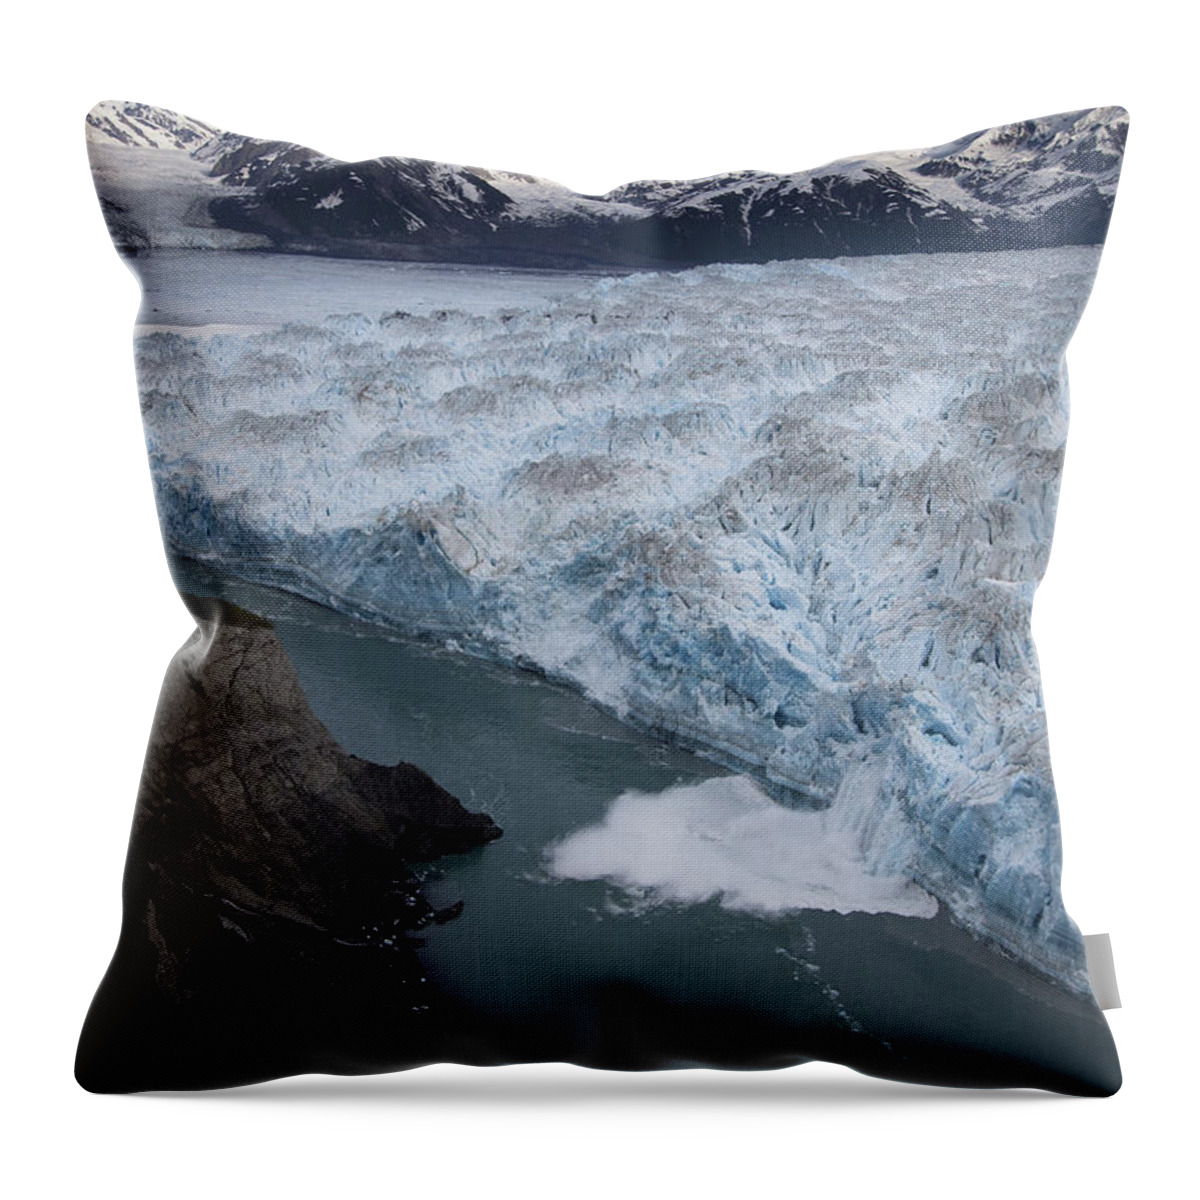 00477978 Throw Pillow featuring the photograph Hubbard Glacier Encroaching On Gilbert Point #6 by Matthias Breiter